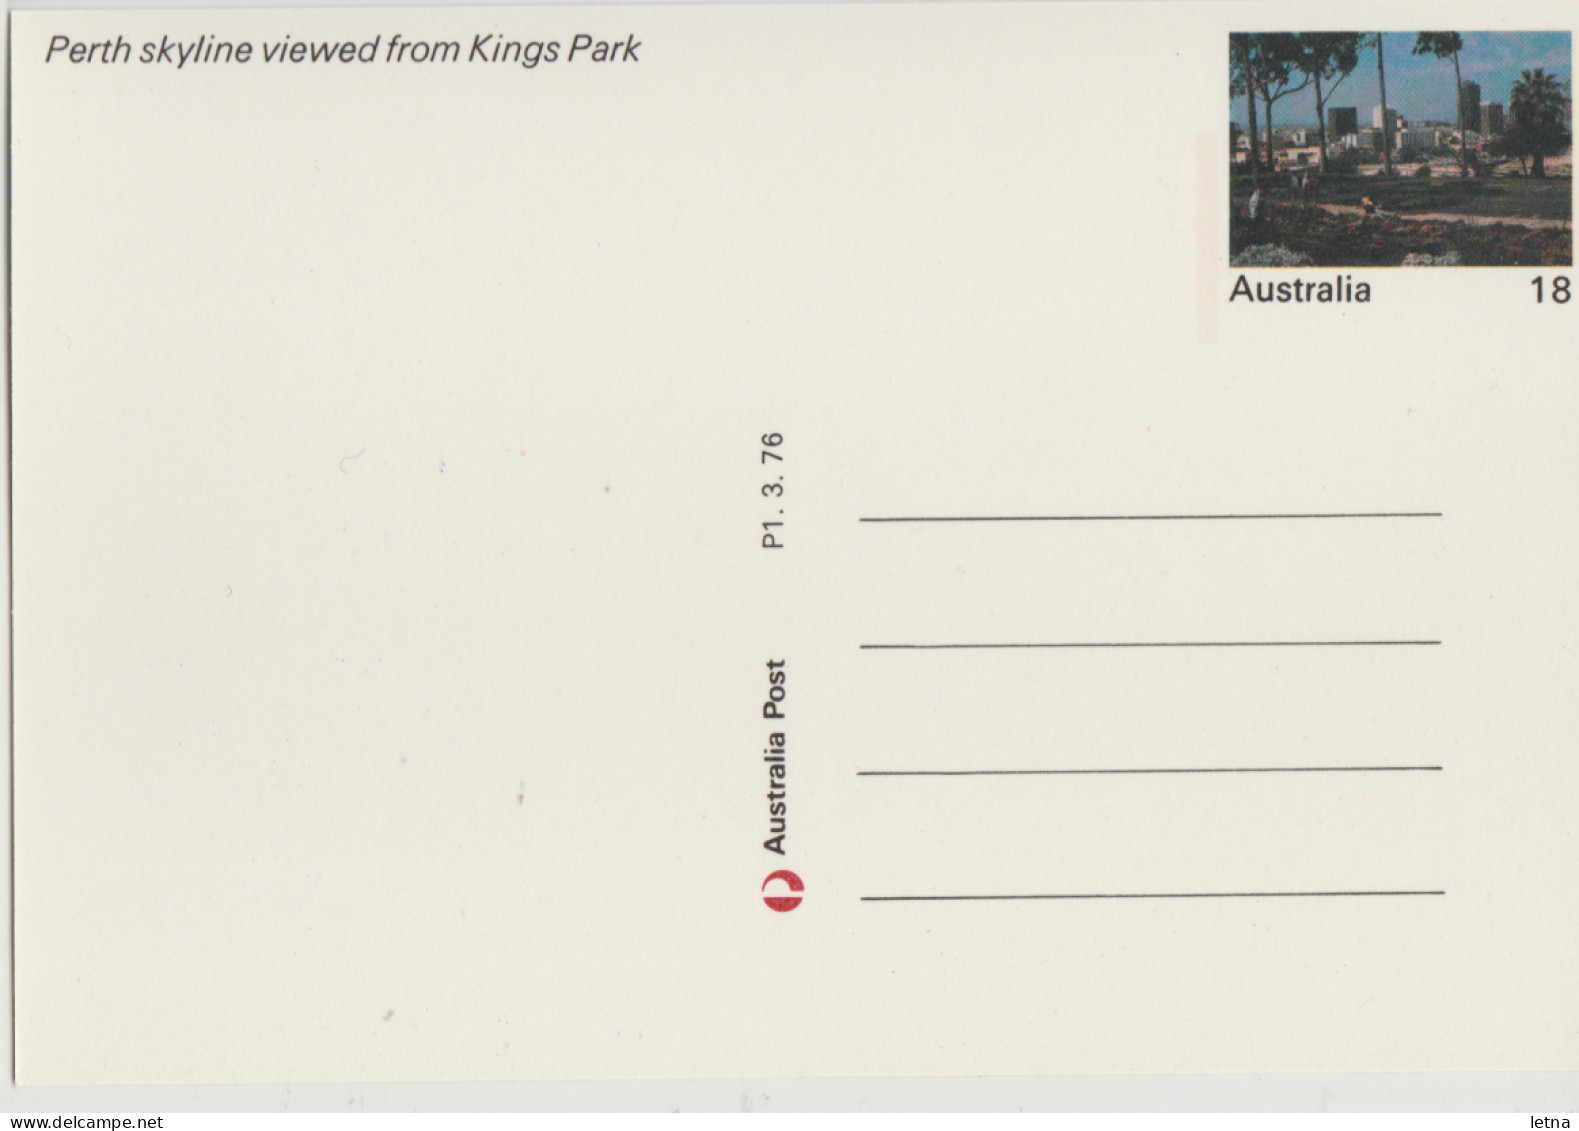 WESTERN AUSTRALIA WA Kings Park View To PERTH 18c Prepaid Australia Post Postcard 1976 - Perth